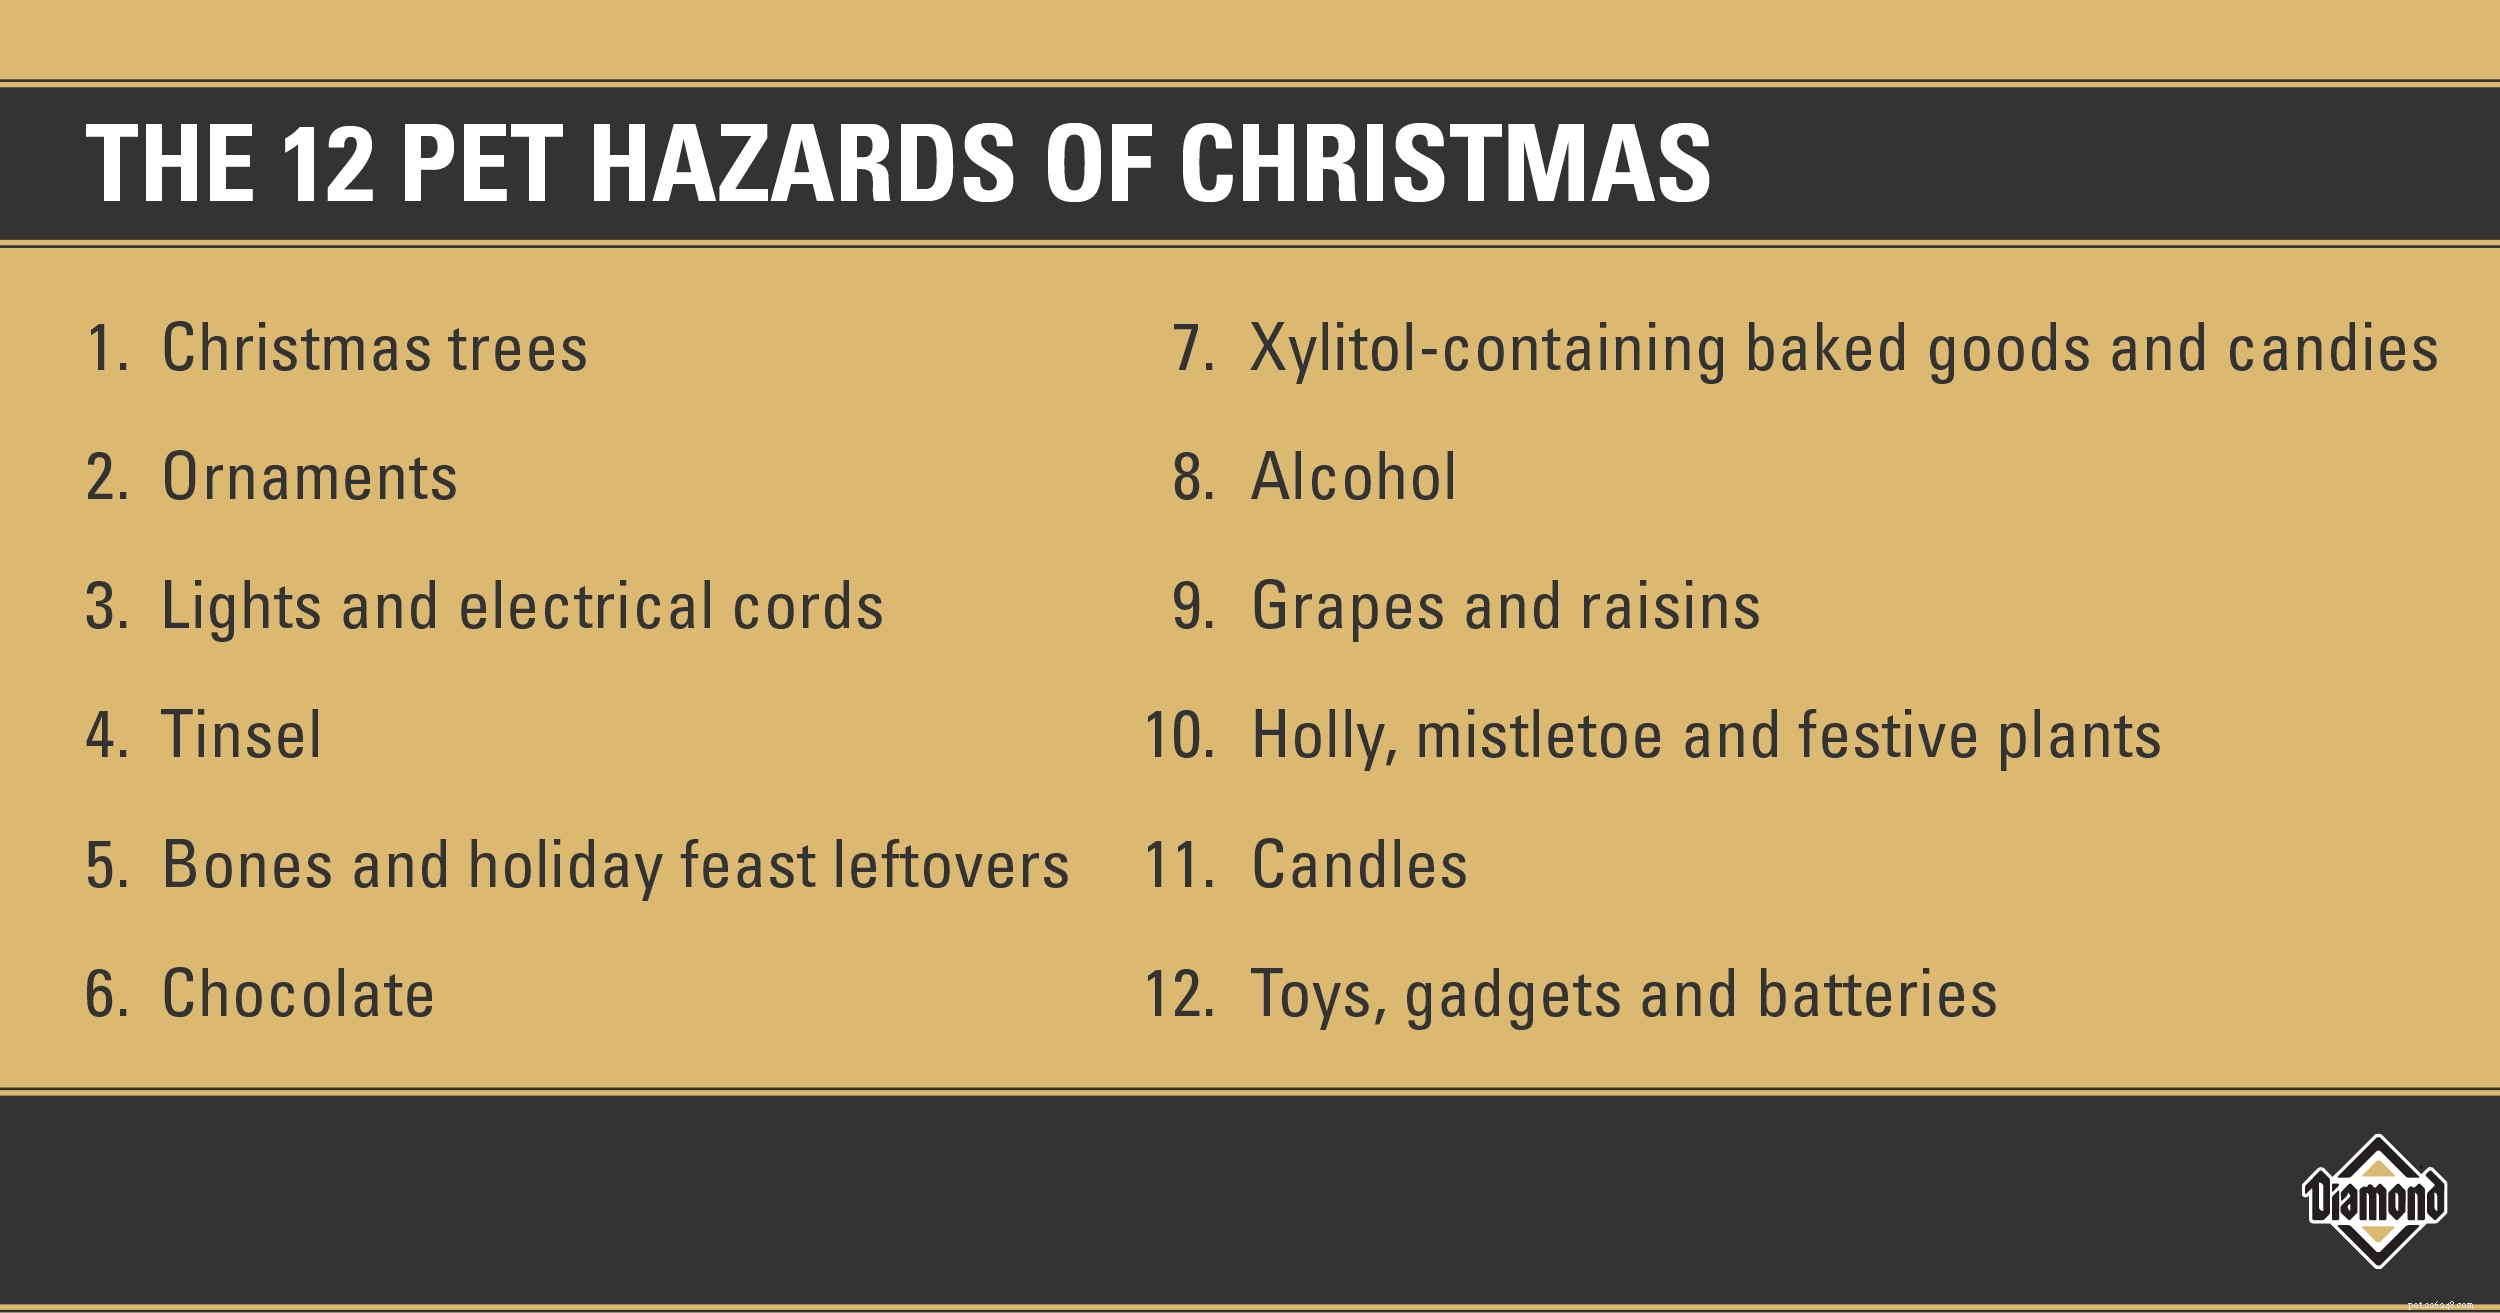 The 12 Pet Hazards of Christmas